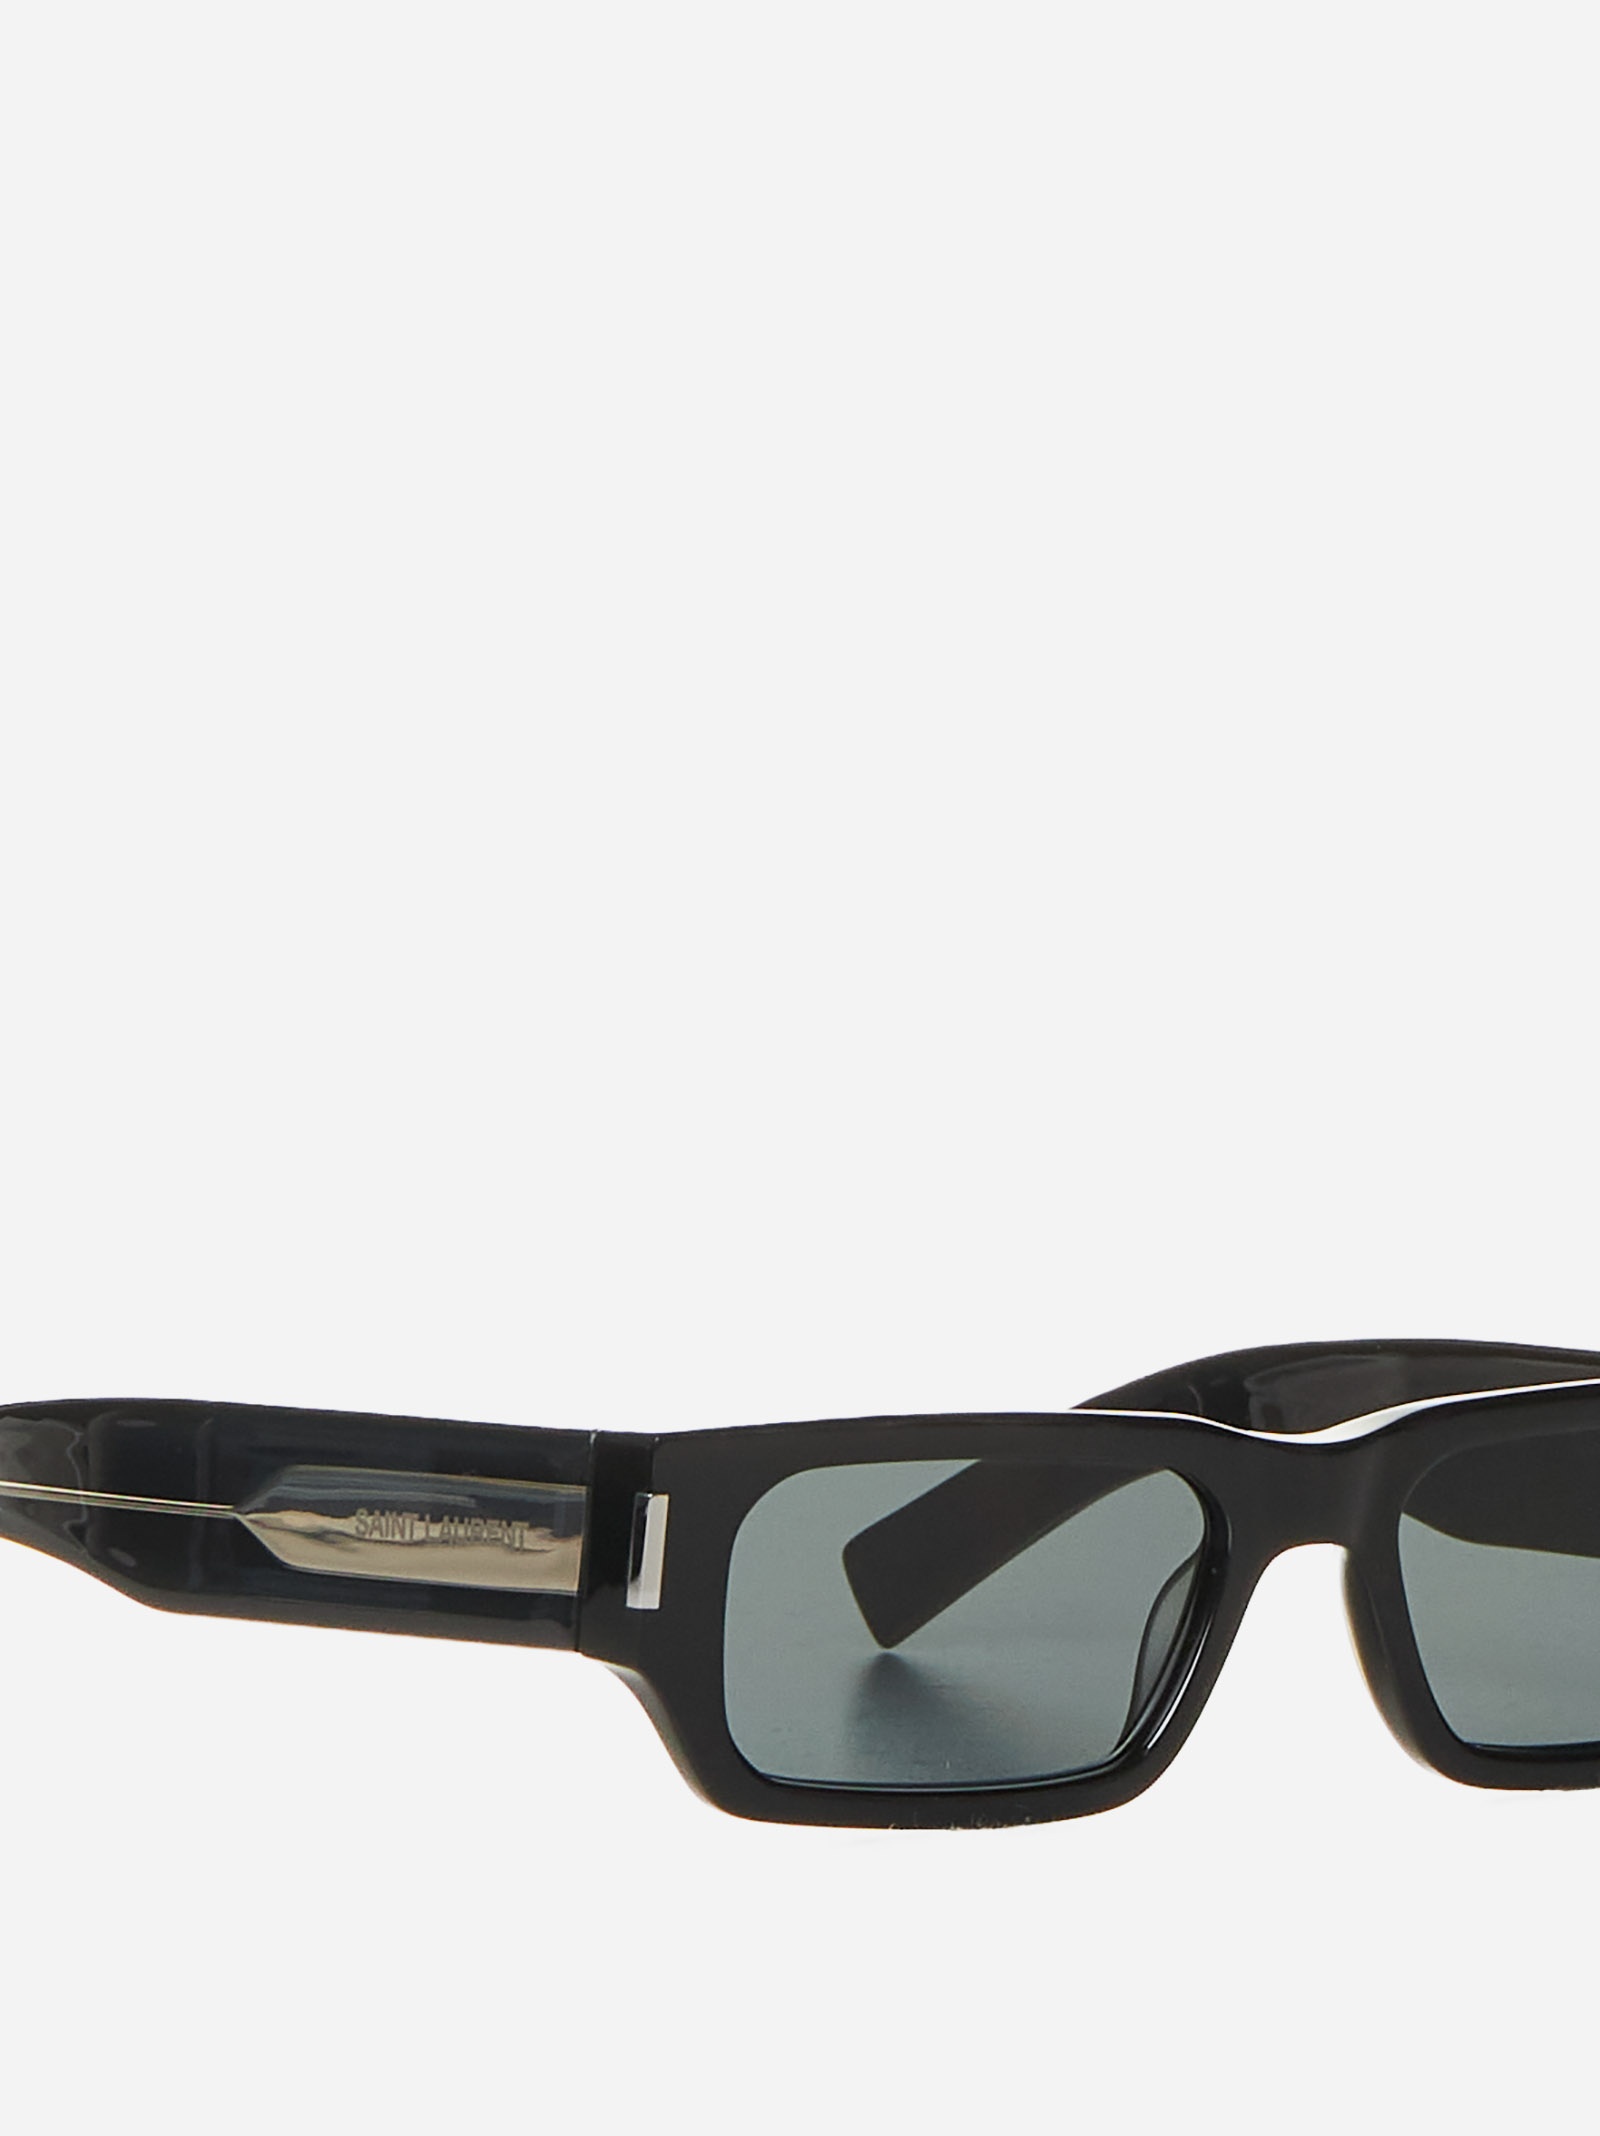 SL 660 sunglasses - 4